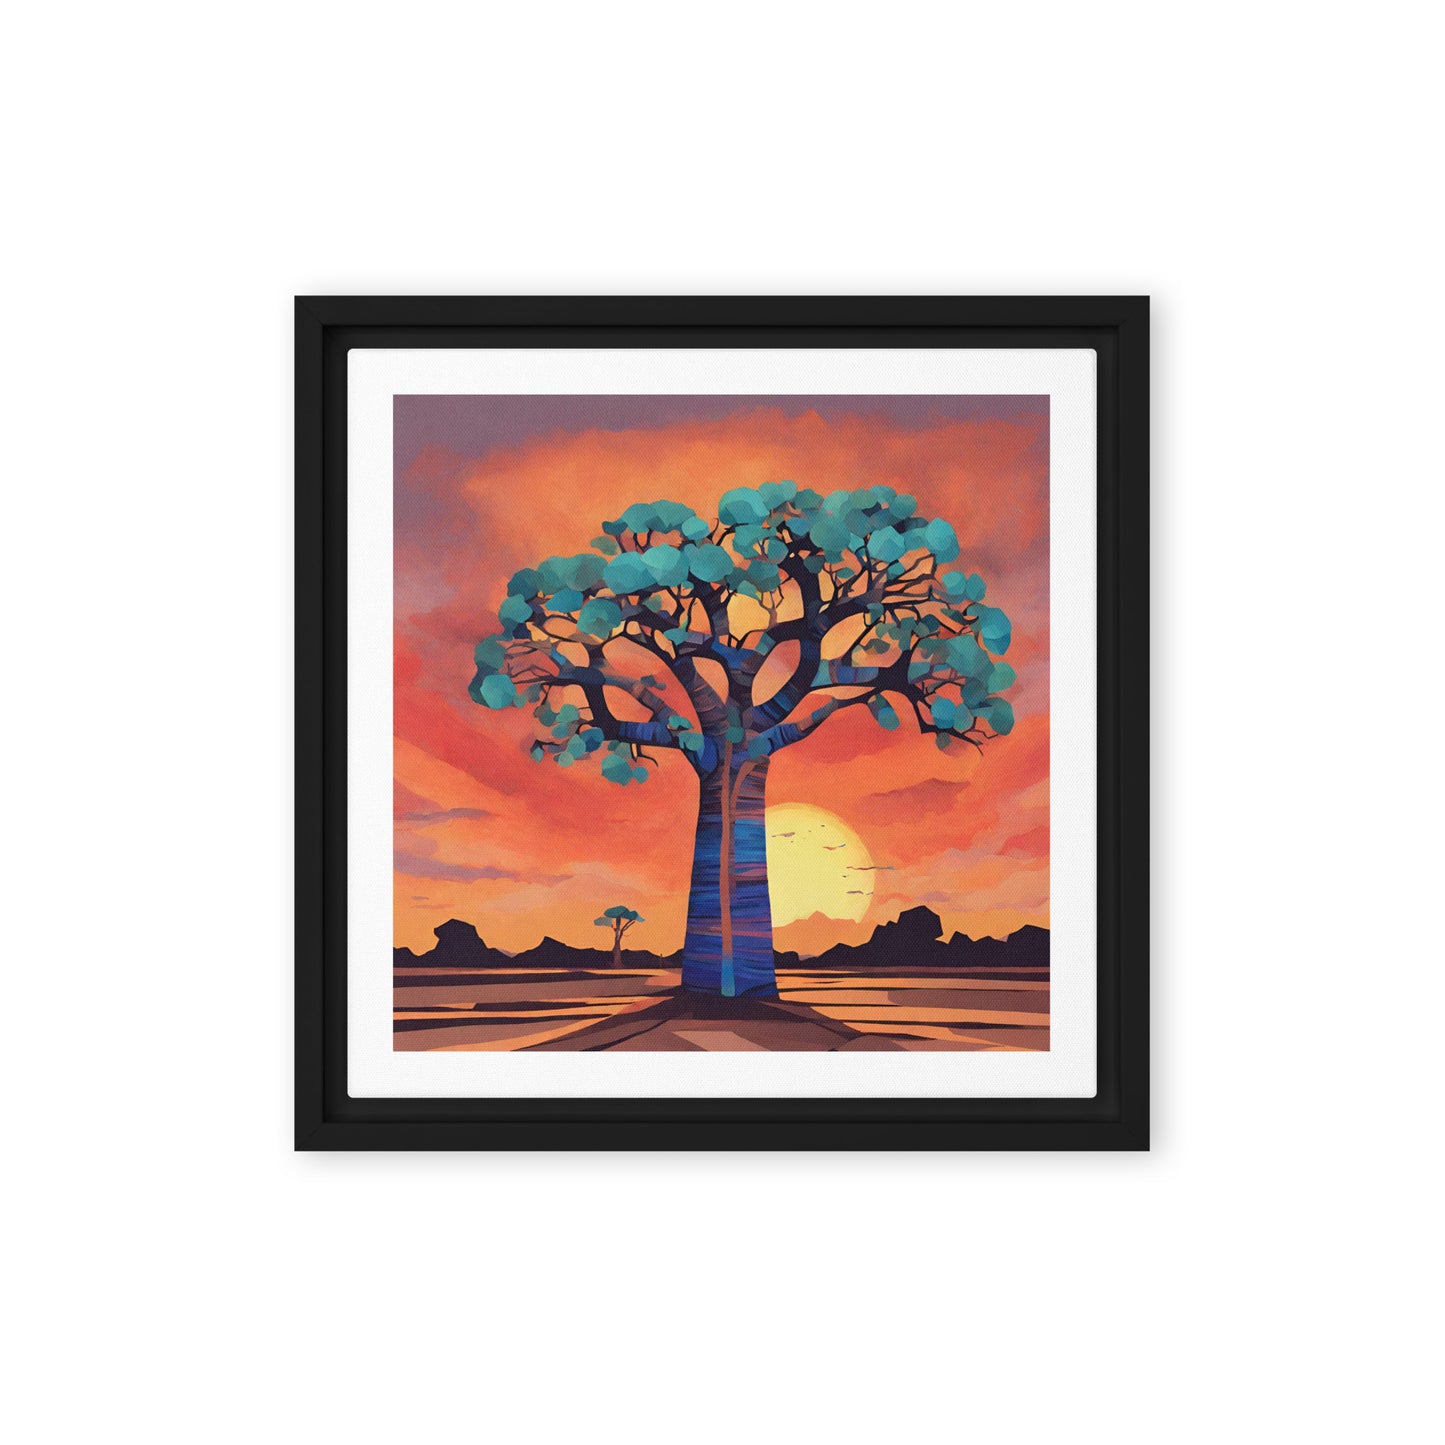 Madagascar tree of life - Framed canvas